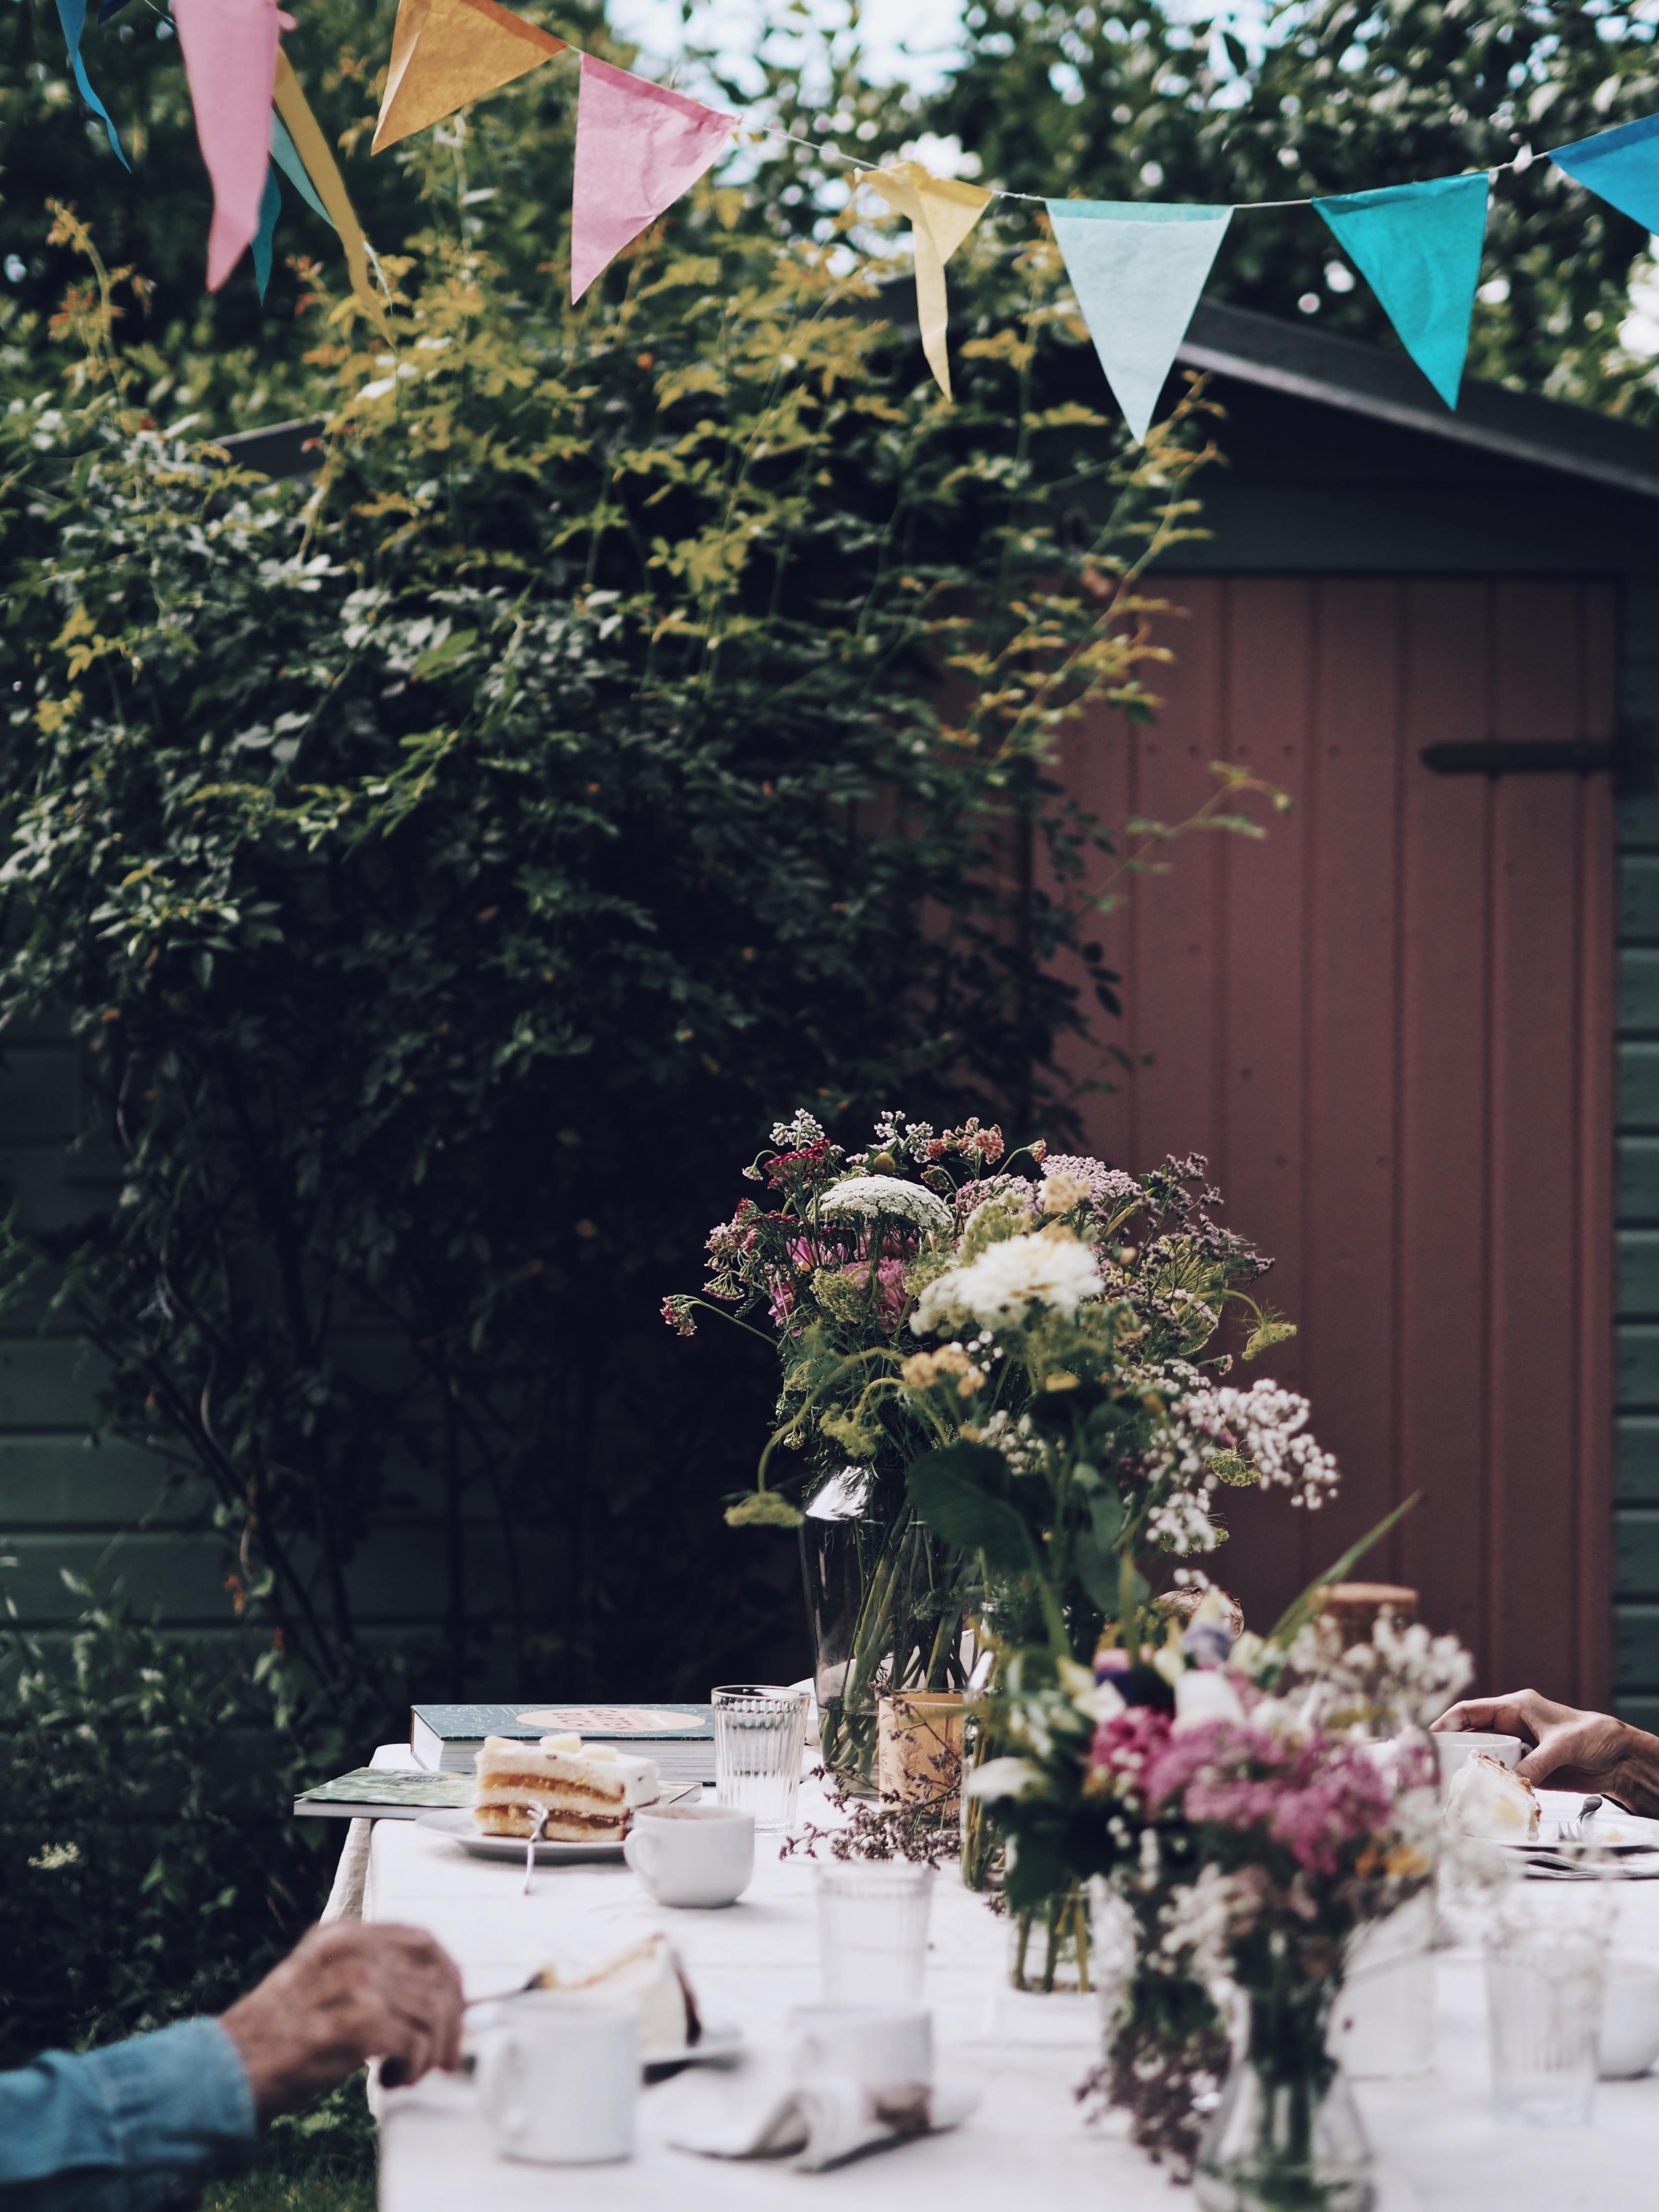 Gartentafel #garten #gartenhaus #farben #beere #tisch #feier #hyggelig #outdoor #tafel #tischdeko